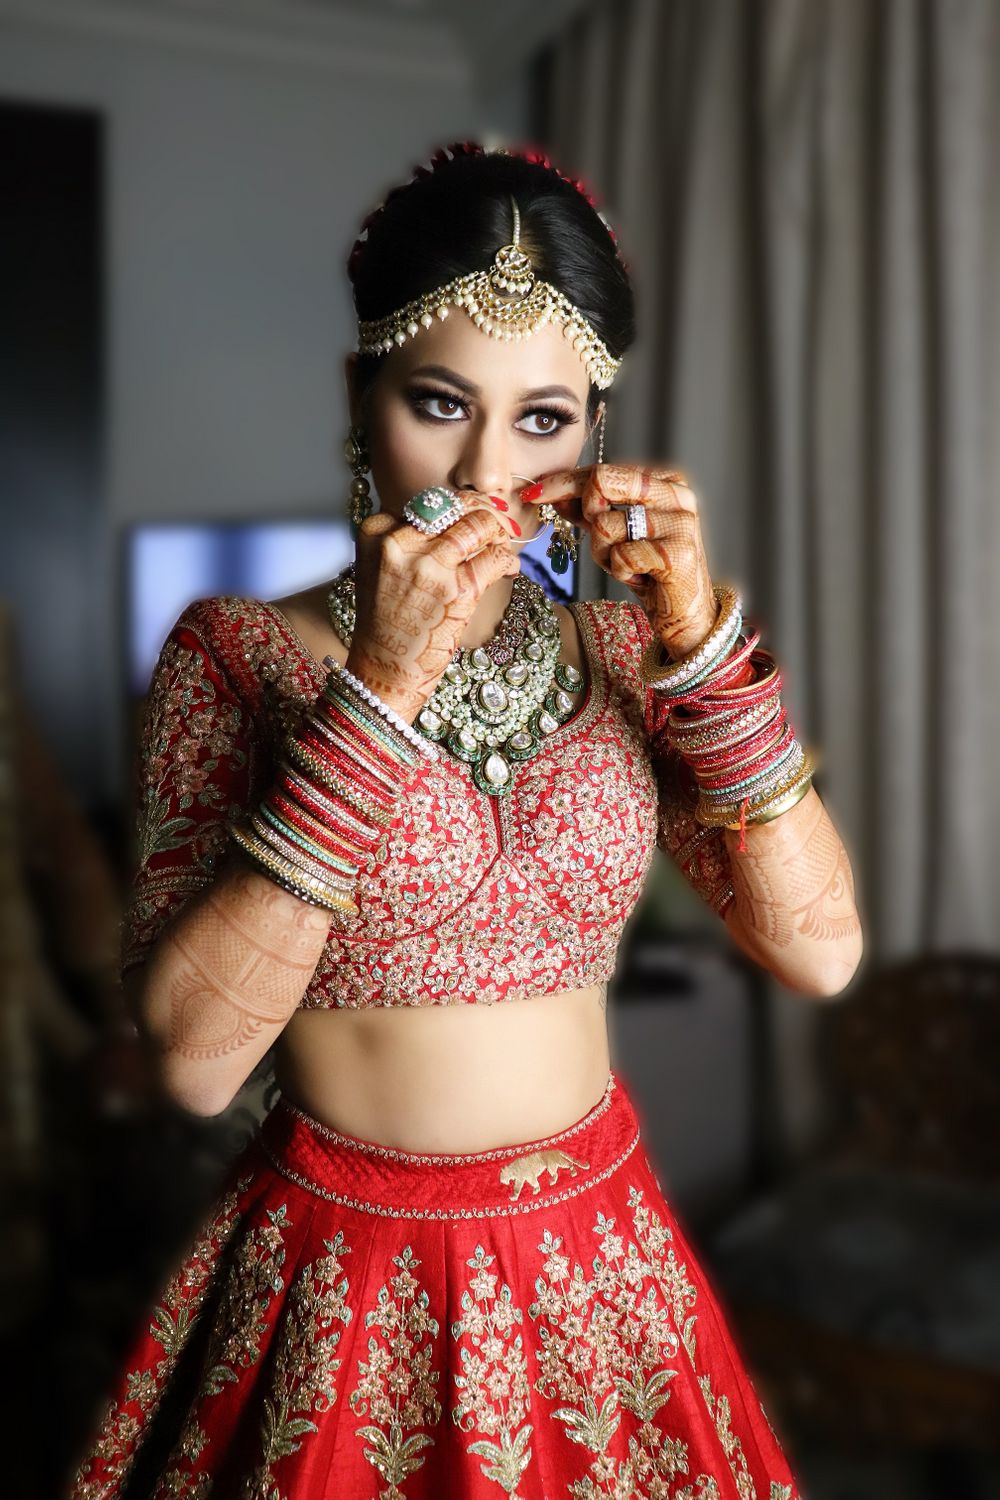 Photo By Renuka Krishna - Bridal Makeup